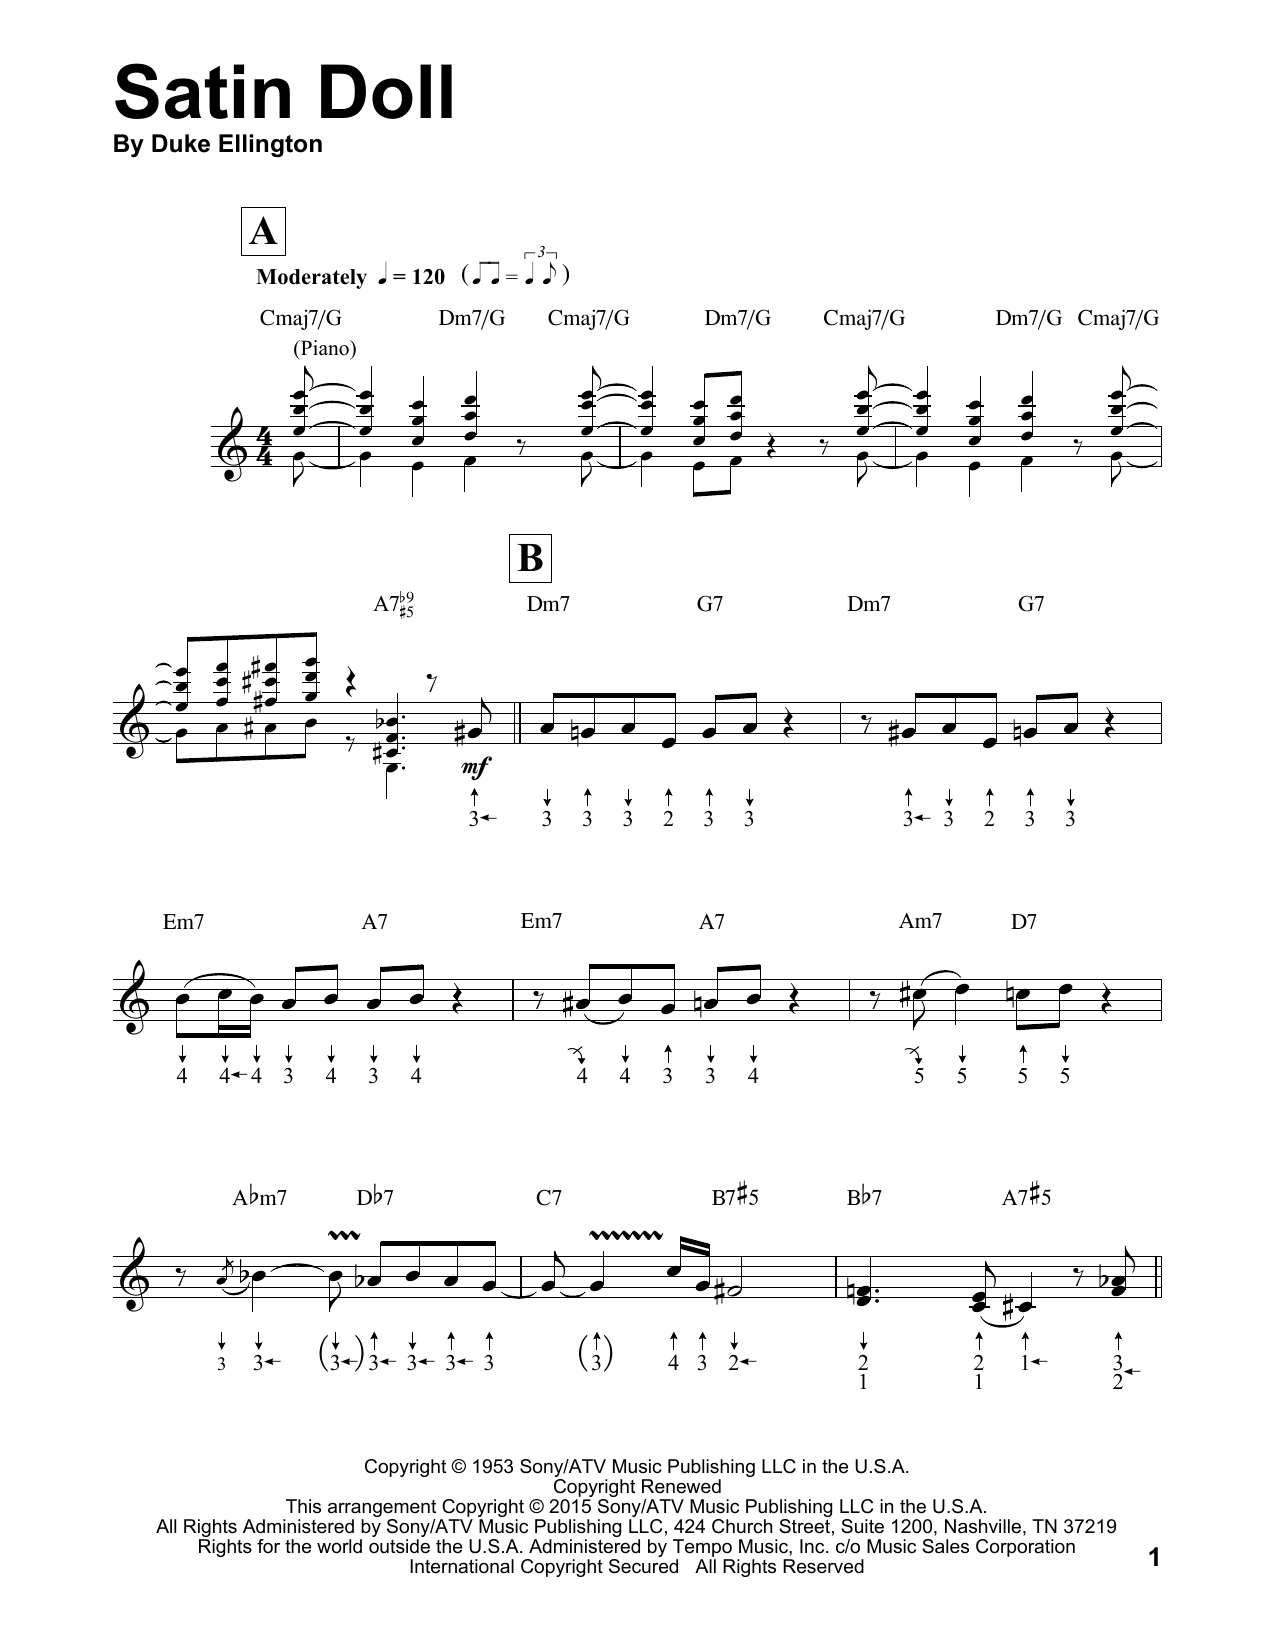 Duke Ellington Satin Doll (arr. Will Galison) Sheet Music Notes & Chords for Harmonica - Download or Print PDF